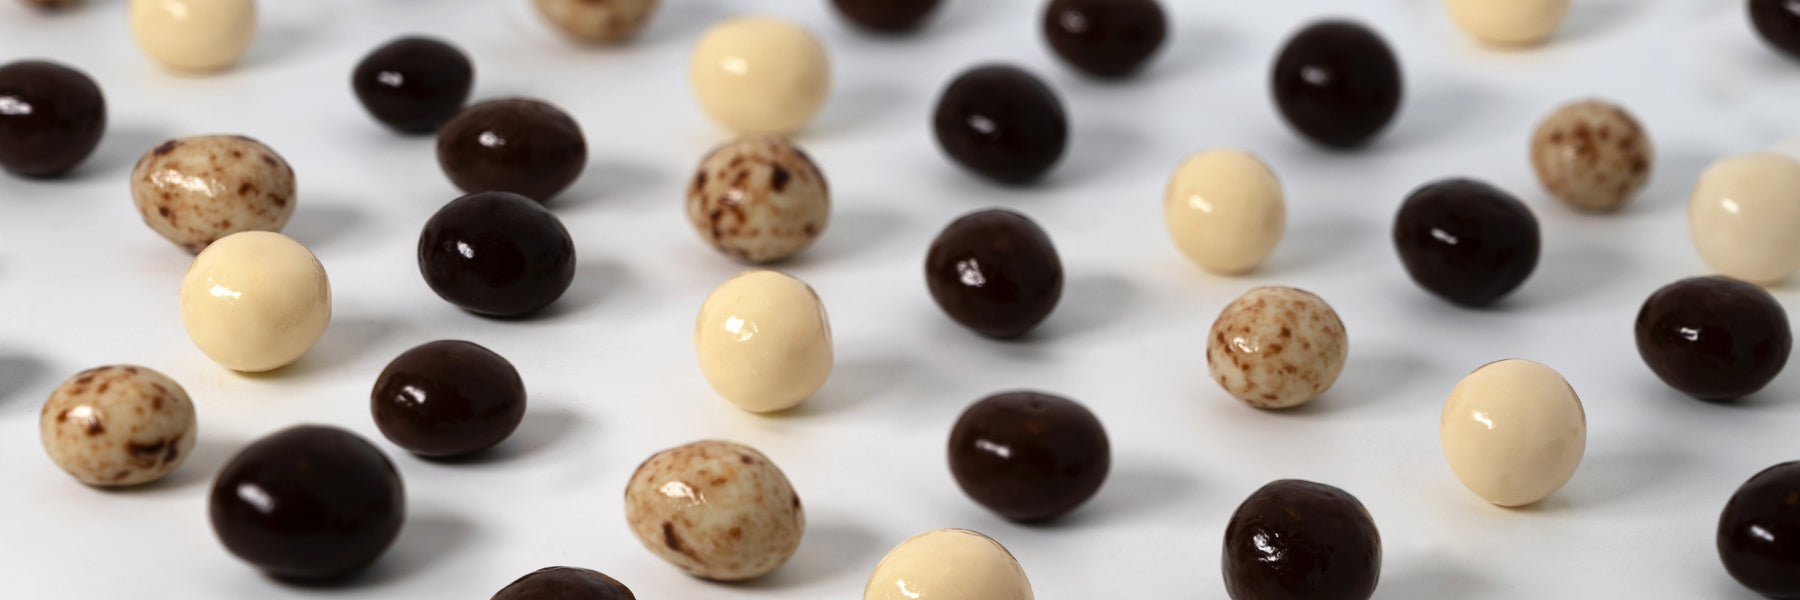 Dilettante Chocolates Espresso beans against a Plain White Background